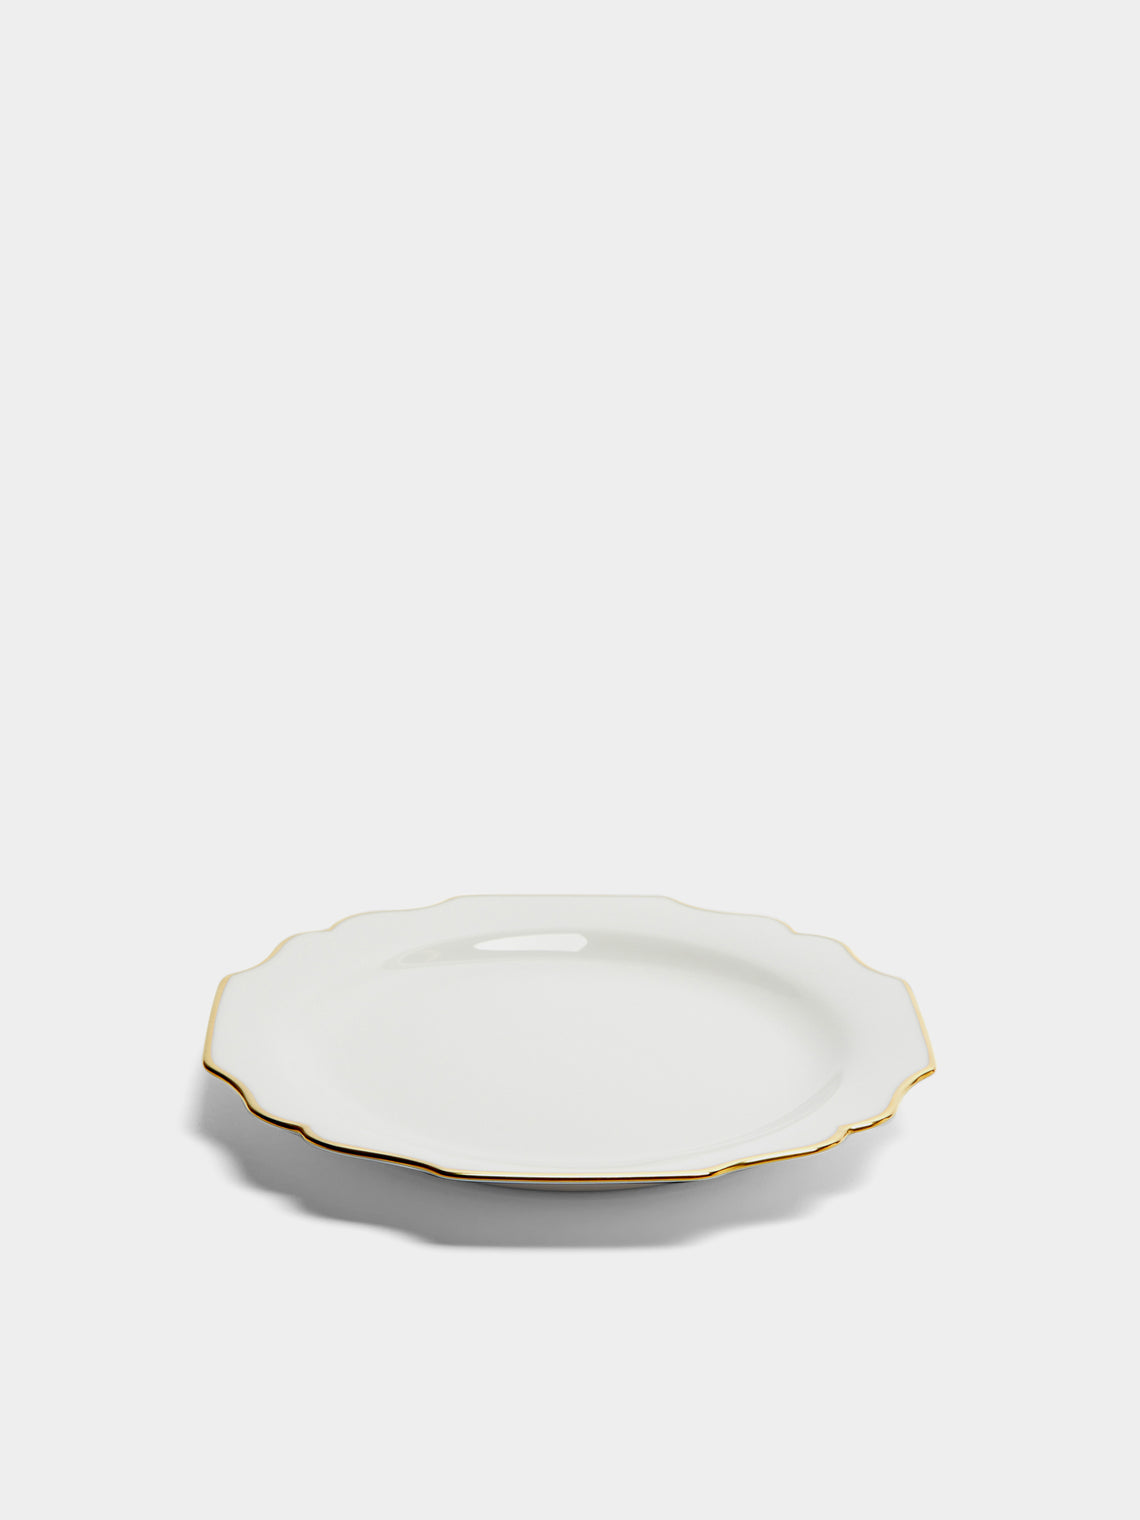 Augarten - Belvedere Hand-Painted Porcelain Dessert Plate - White - ABASK